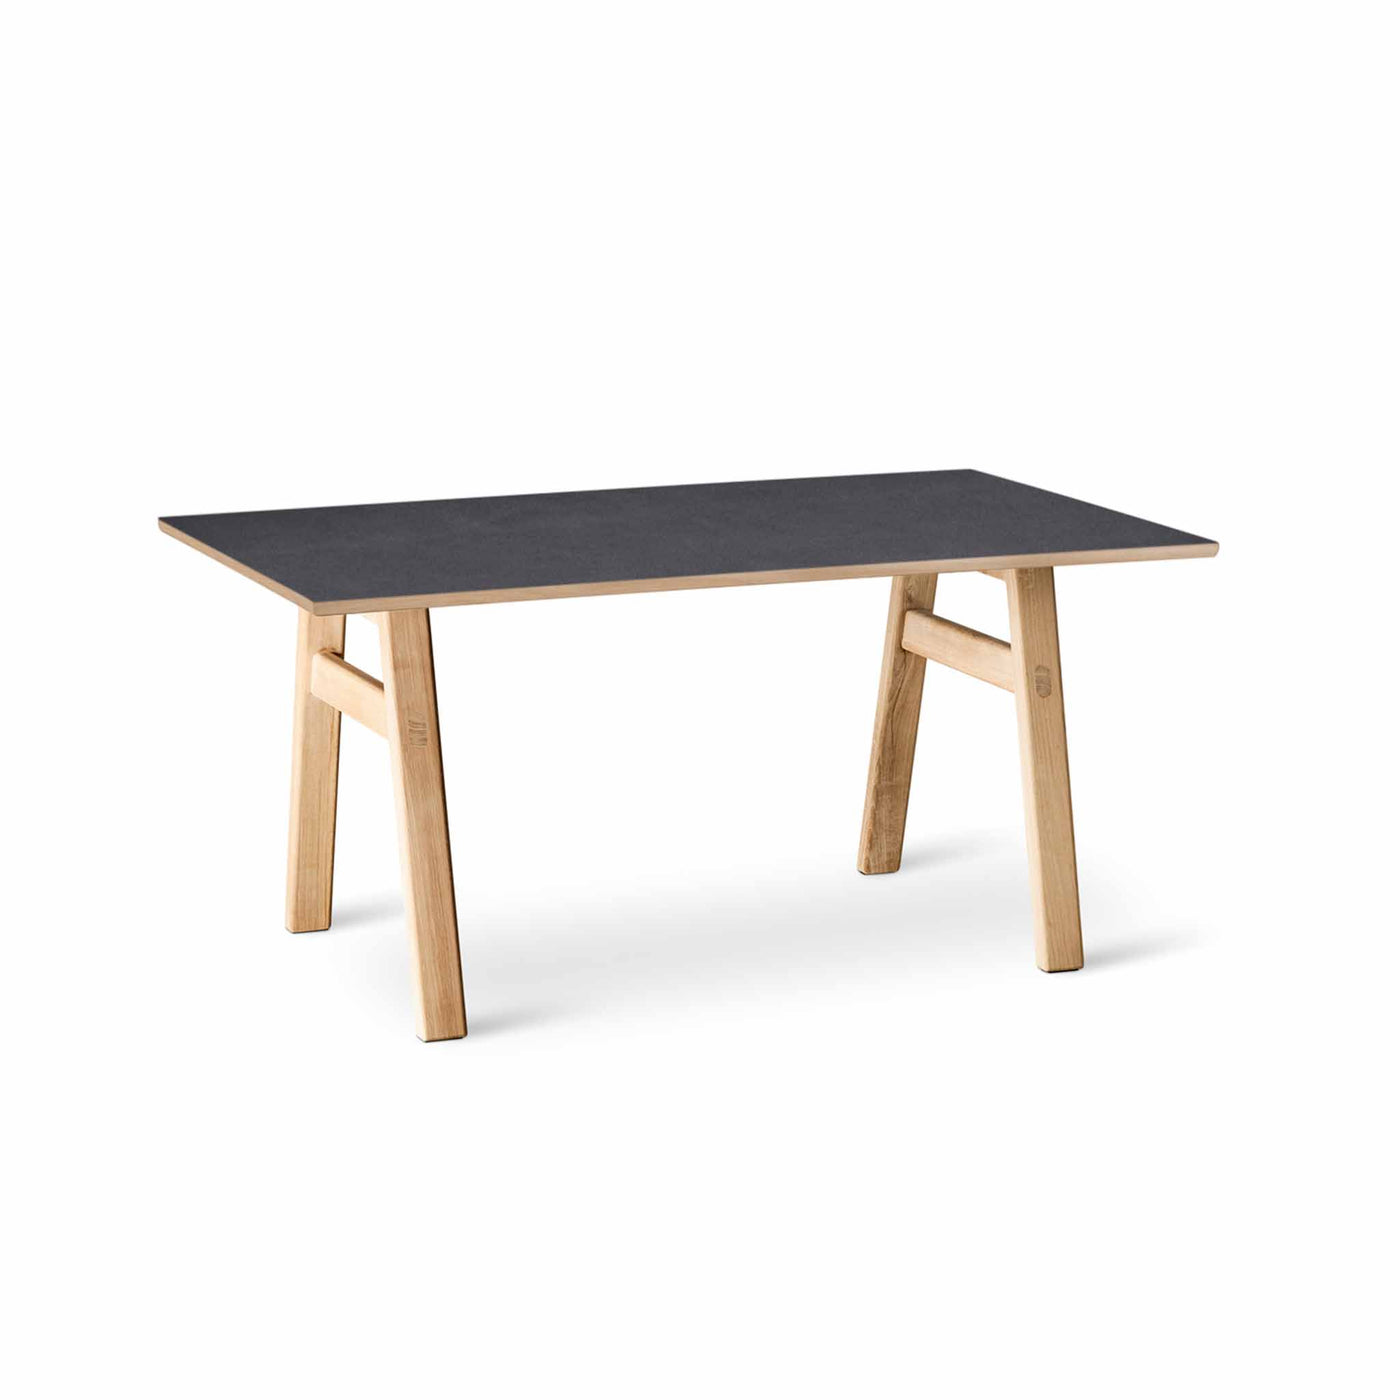 Svane Design Idyl spisebord 95 x 160 cm med bordplade i stone look laminat med ben i ubehandlet eg.